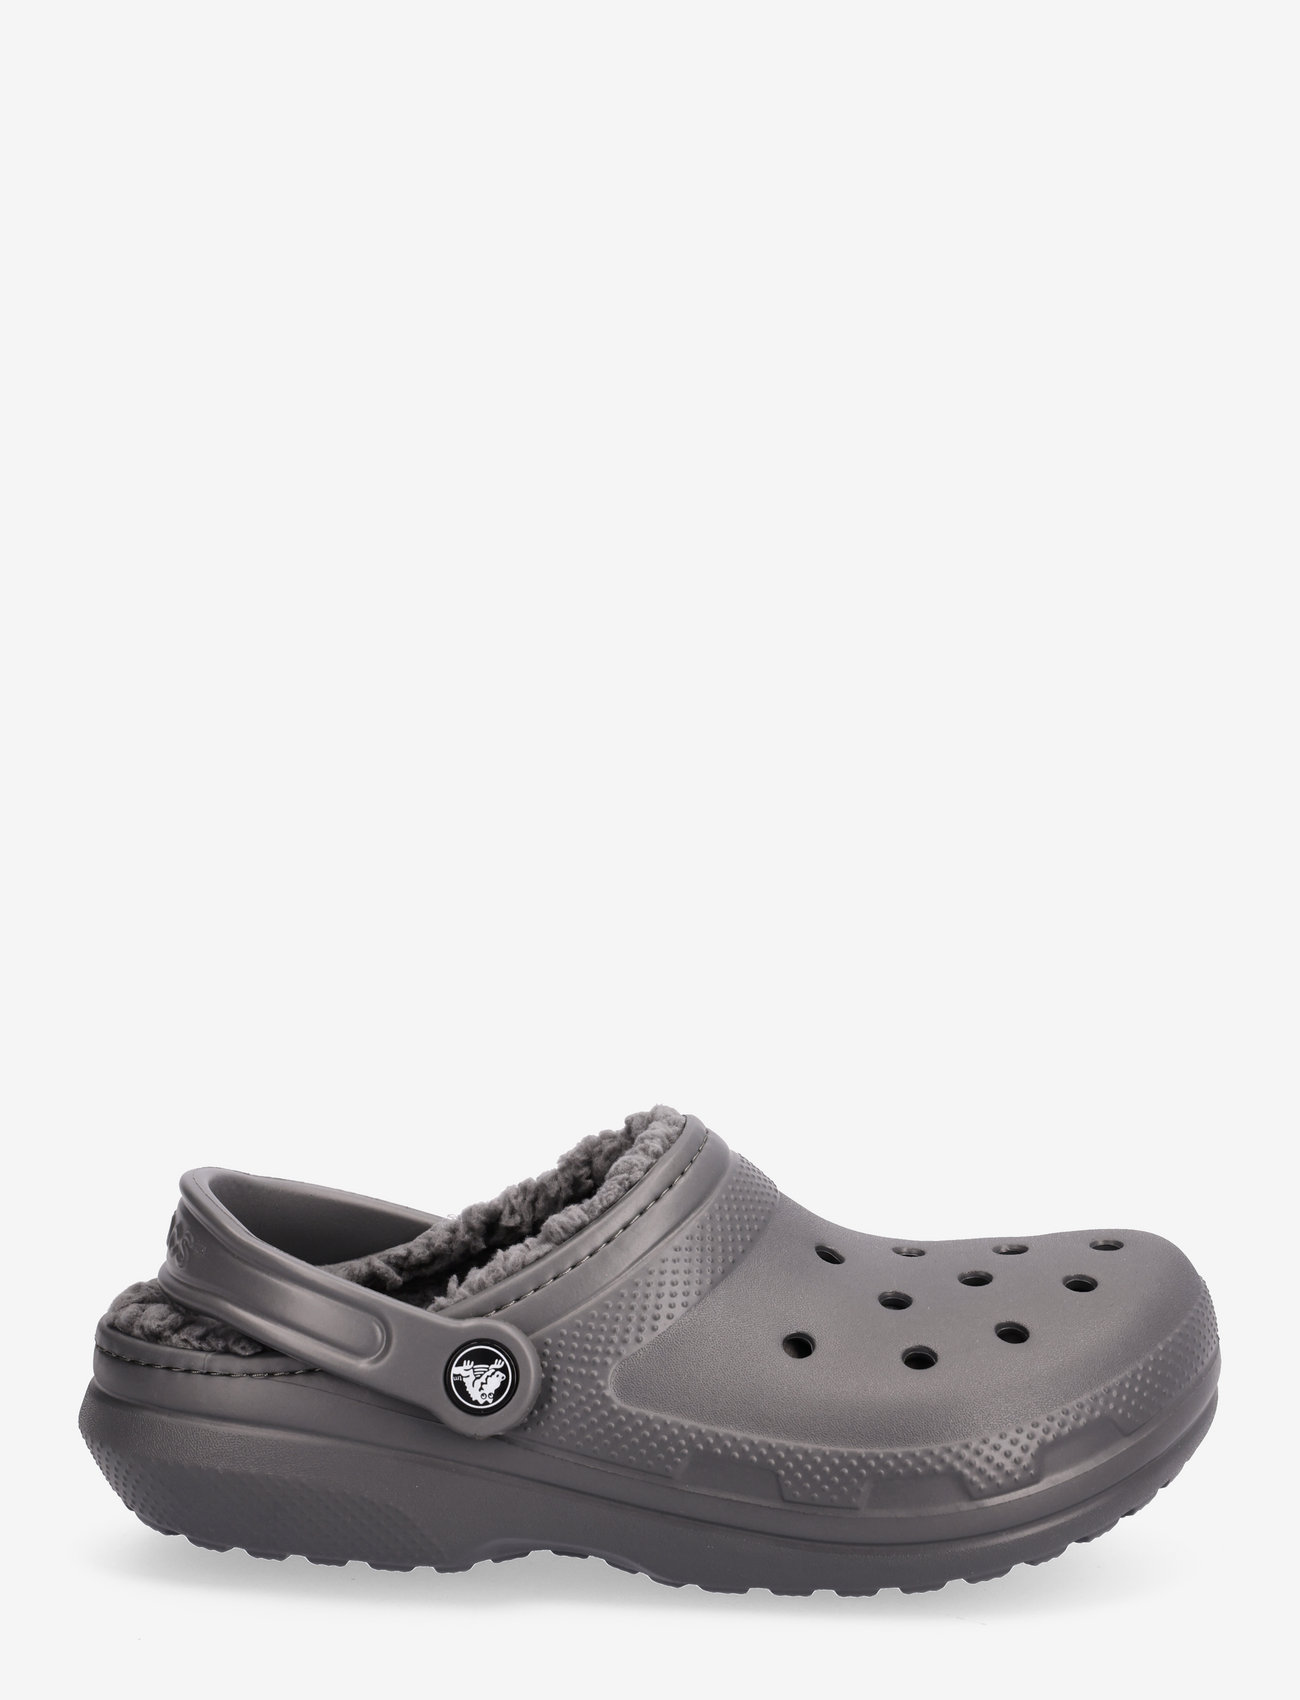 Crocs - Classic Lined Clog - women - slate grey/smoke - 1